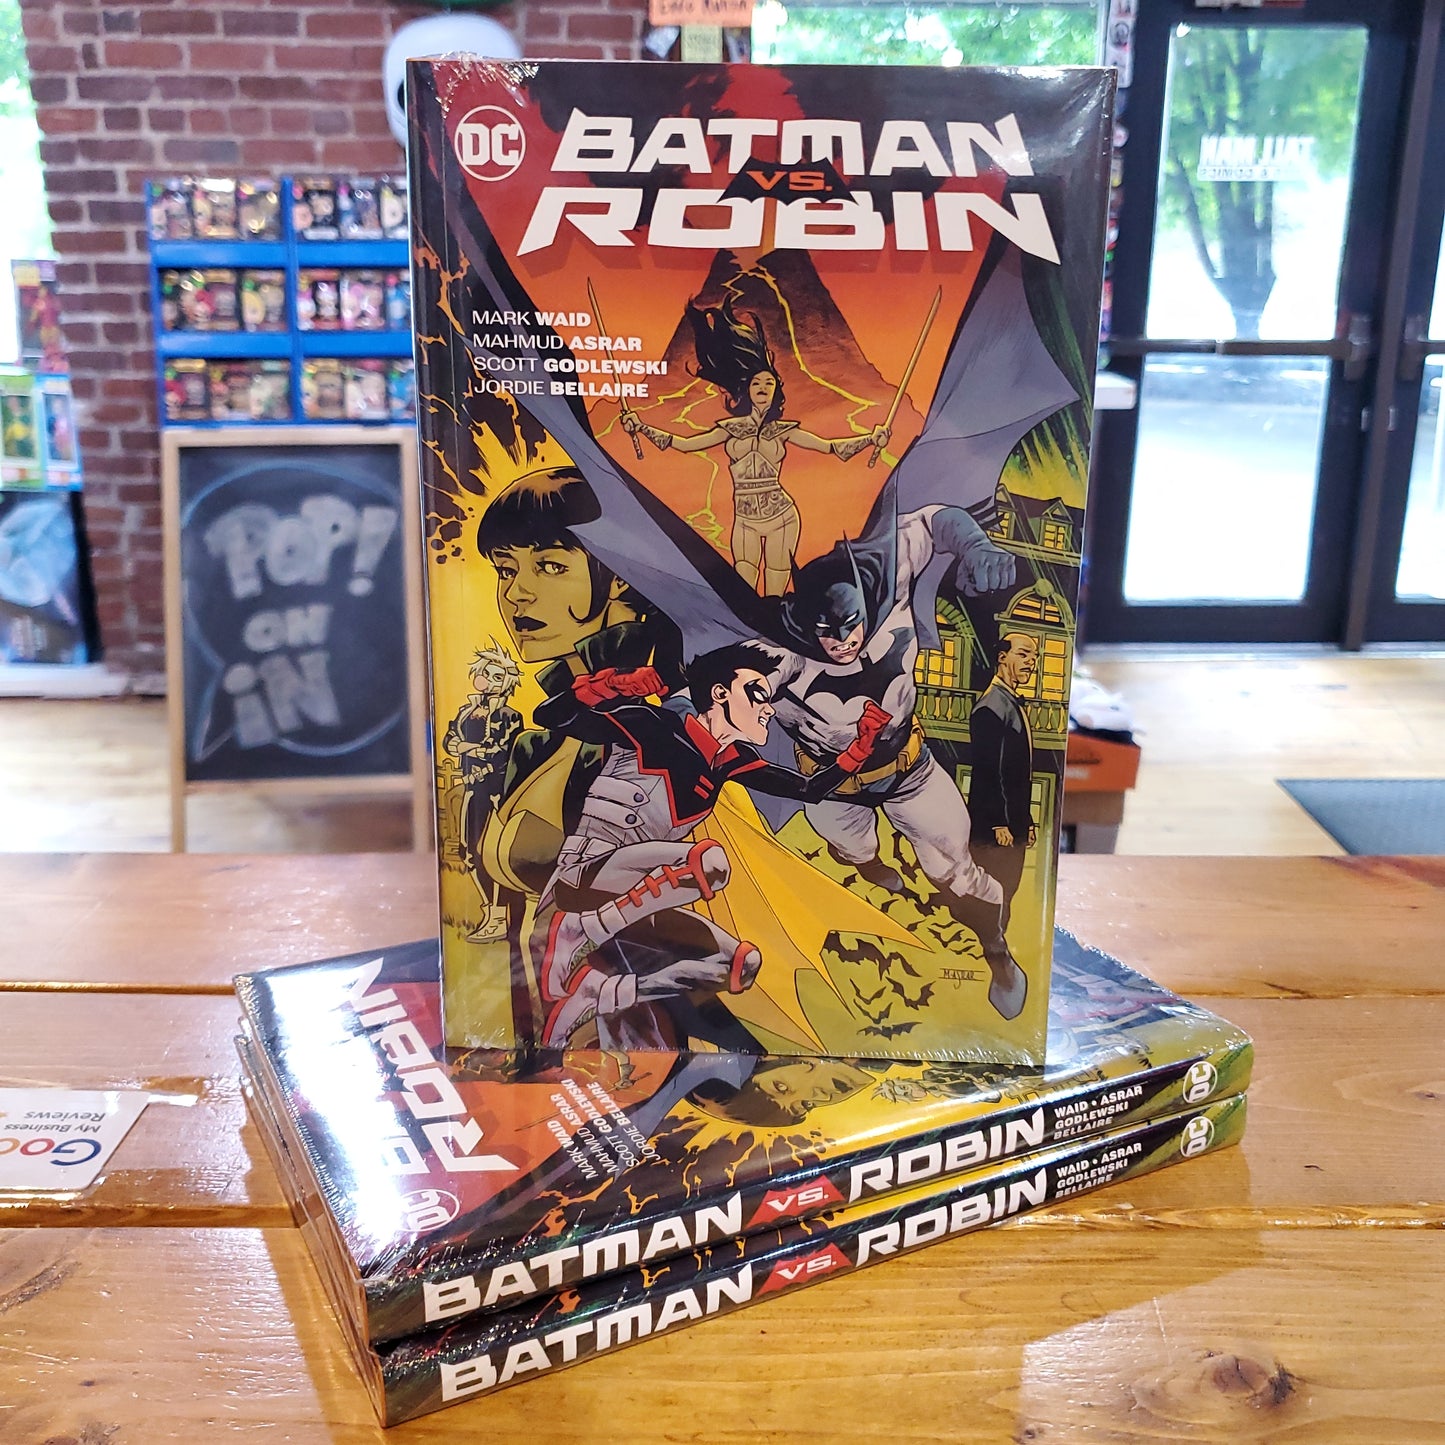 Batman vs. Robin - Hardcover Graphic Novel by DC Comics